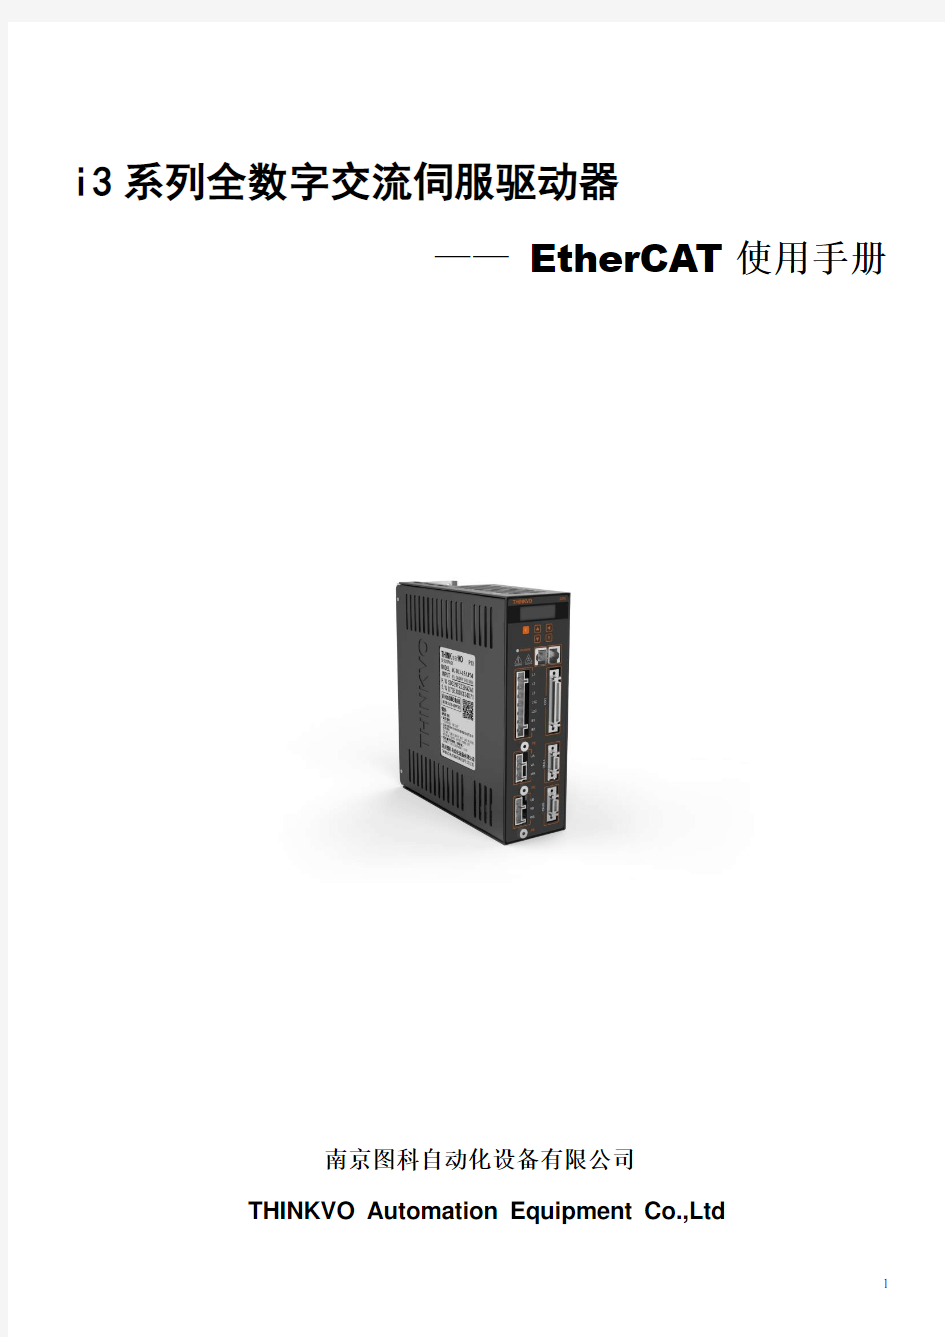 i3系列全数字交流伺服驱动器EtherCAT使用说明材料